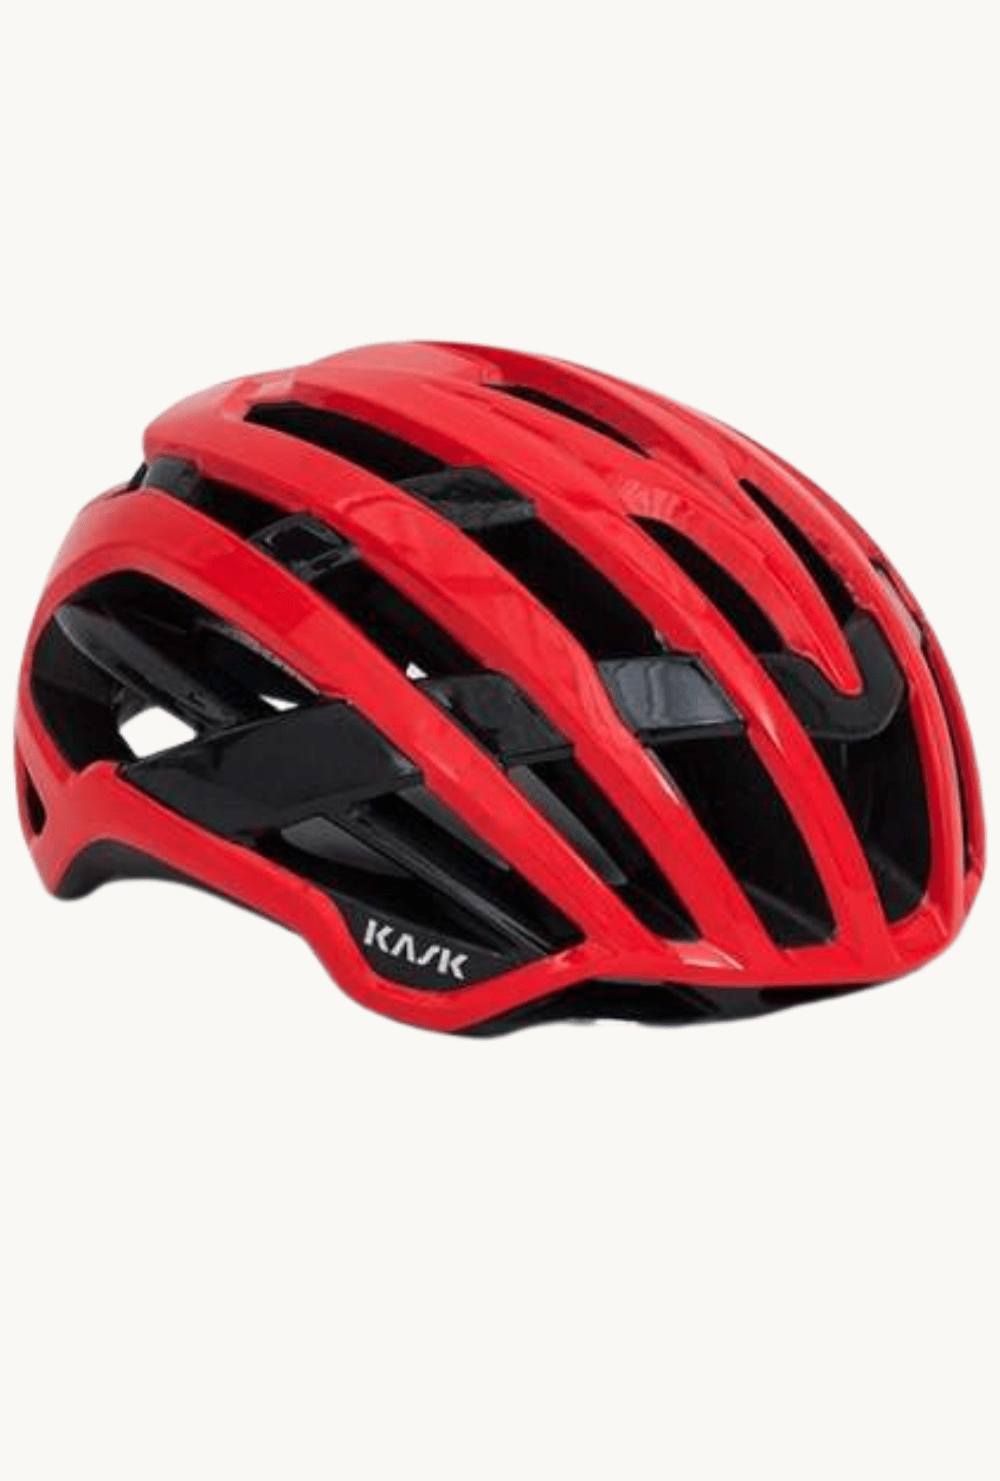 Helmet - Kask Valegro Redmedium / Red